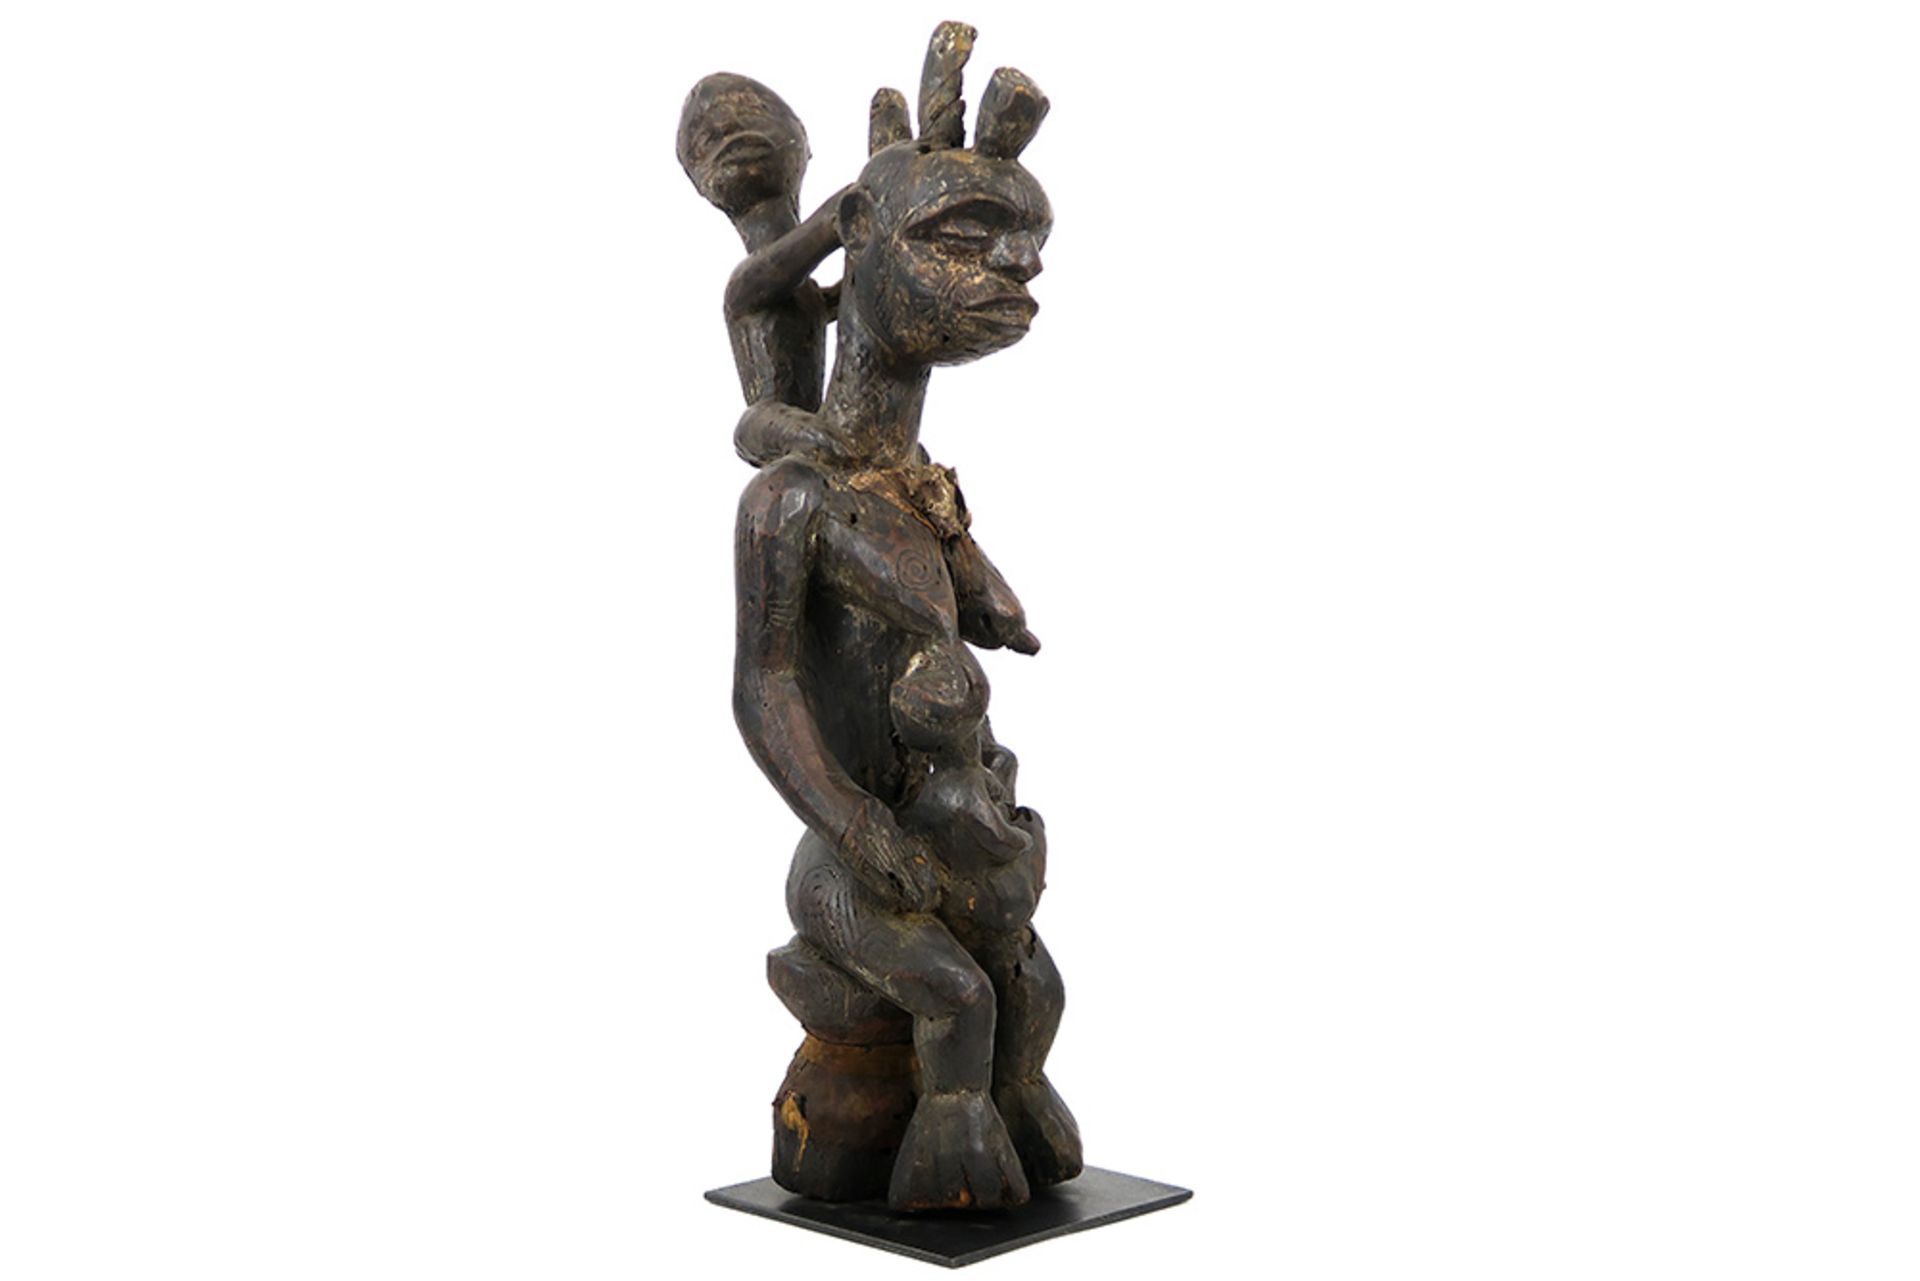 African fertility sculpture in wood || Afrikaans vruchtbaarheidsbeeld in hout met de voorstelling